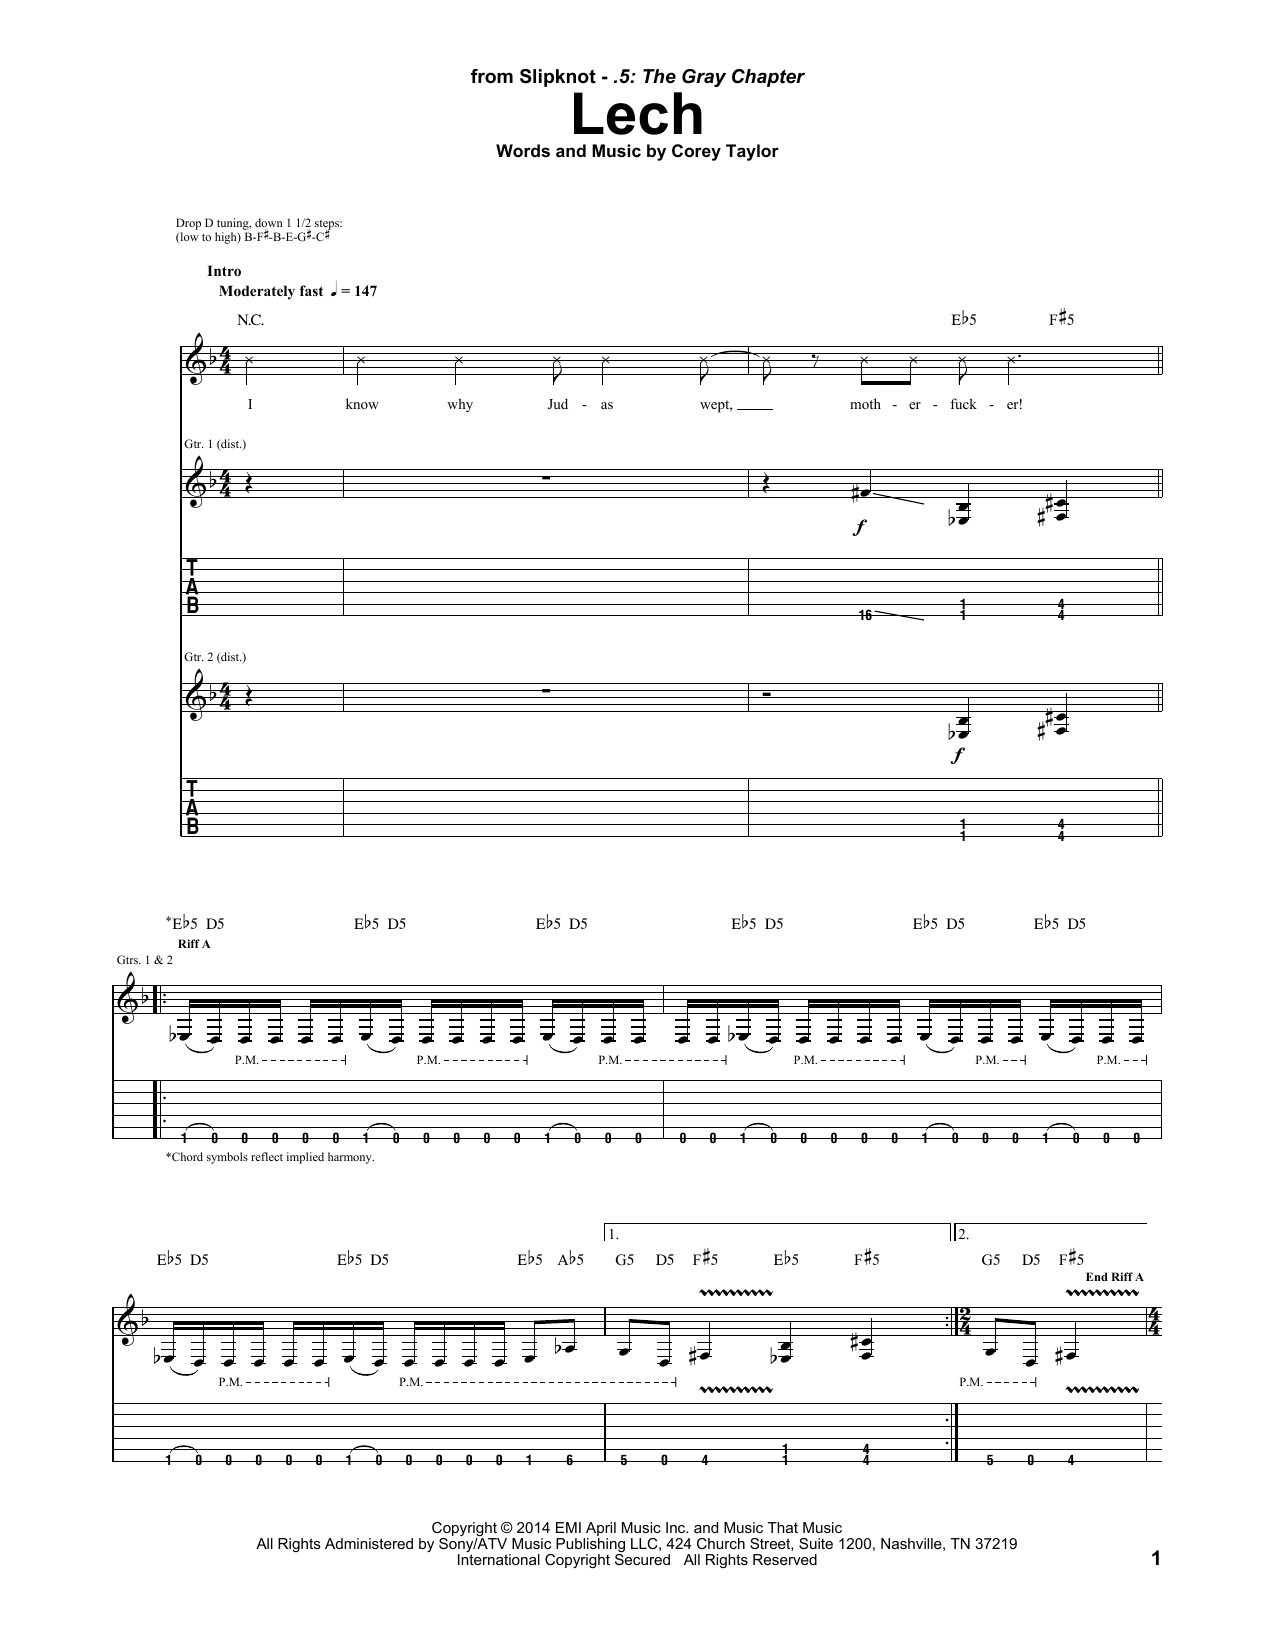 Slipknot Lech Sheet Music Notes & Chords for Guitar Tab - Download or Print PDF